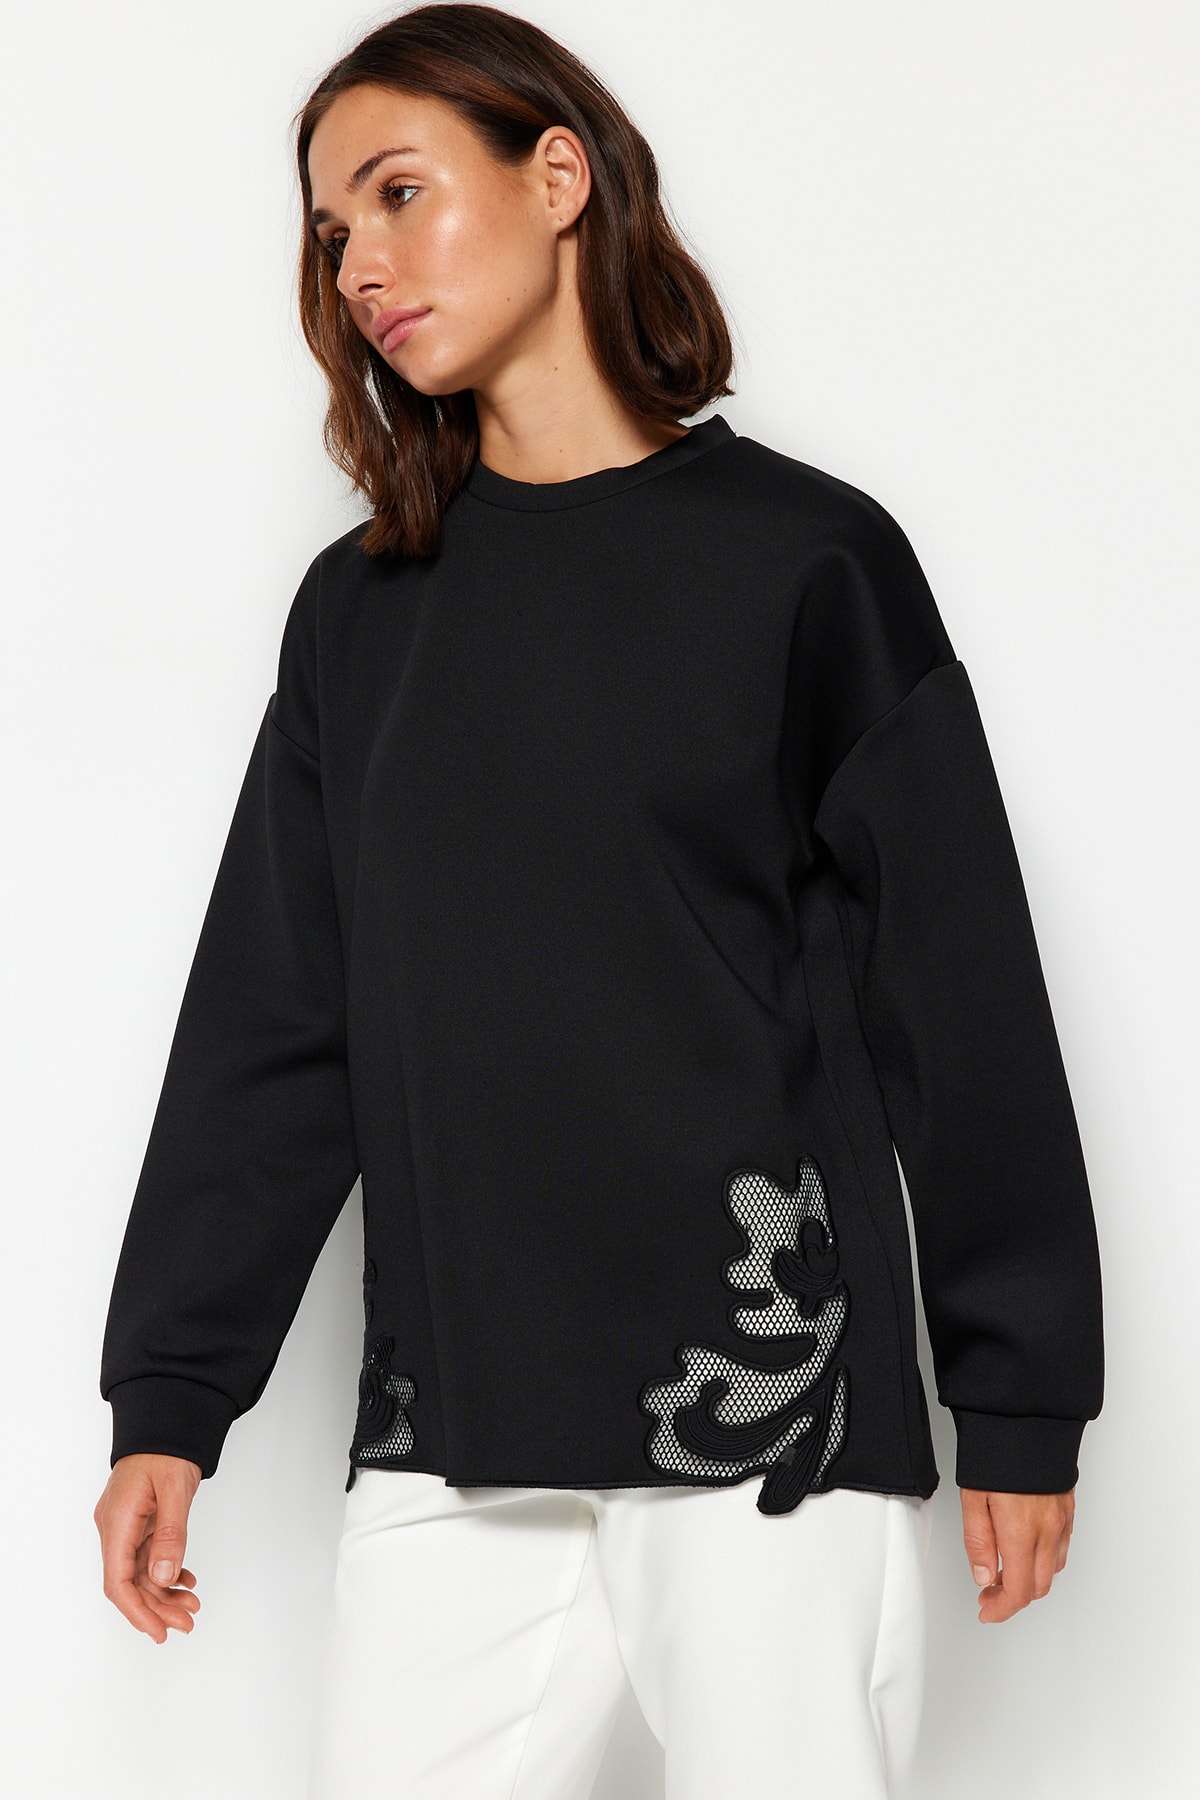 Trendyol Black Lace Detail Diver/Scuba Knitted Sweatshirt